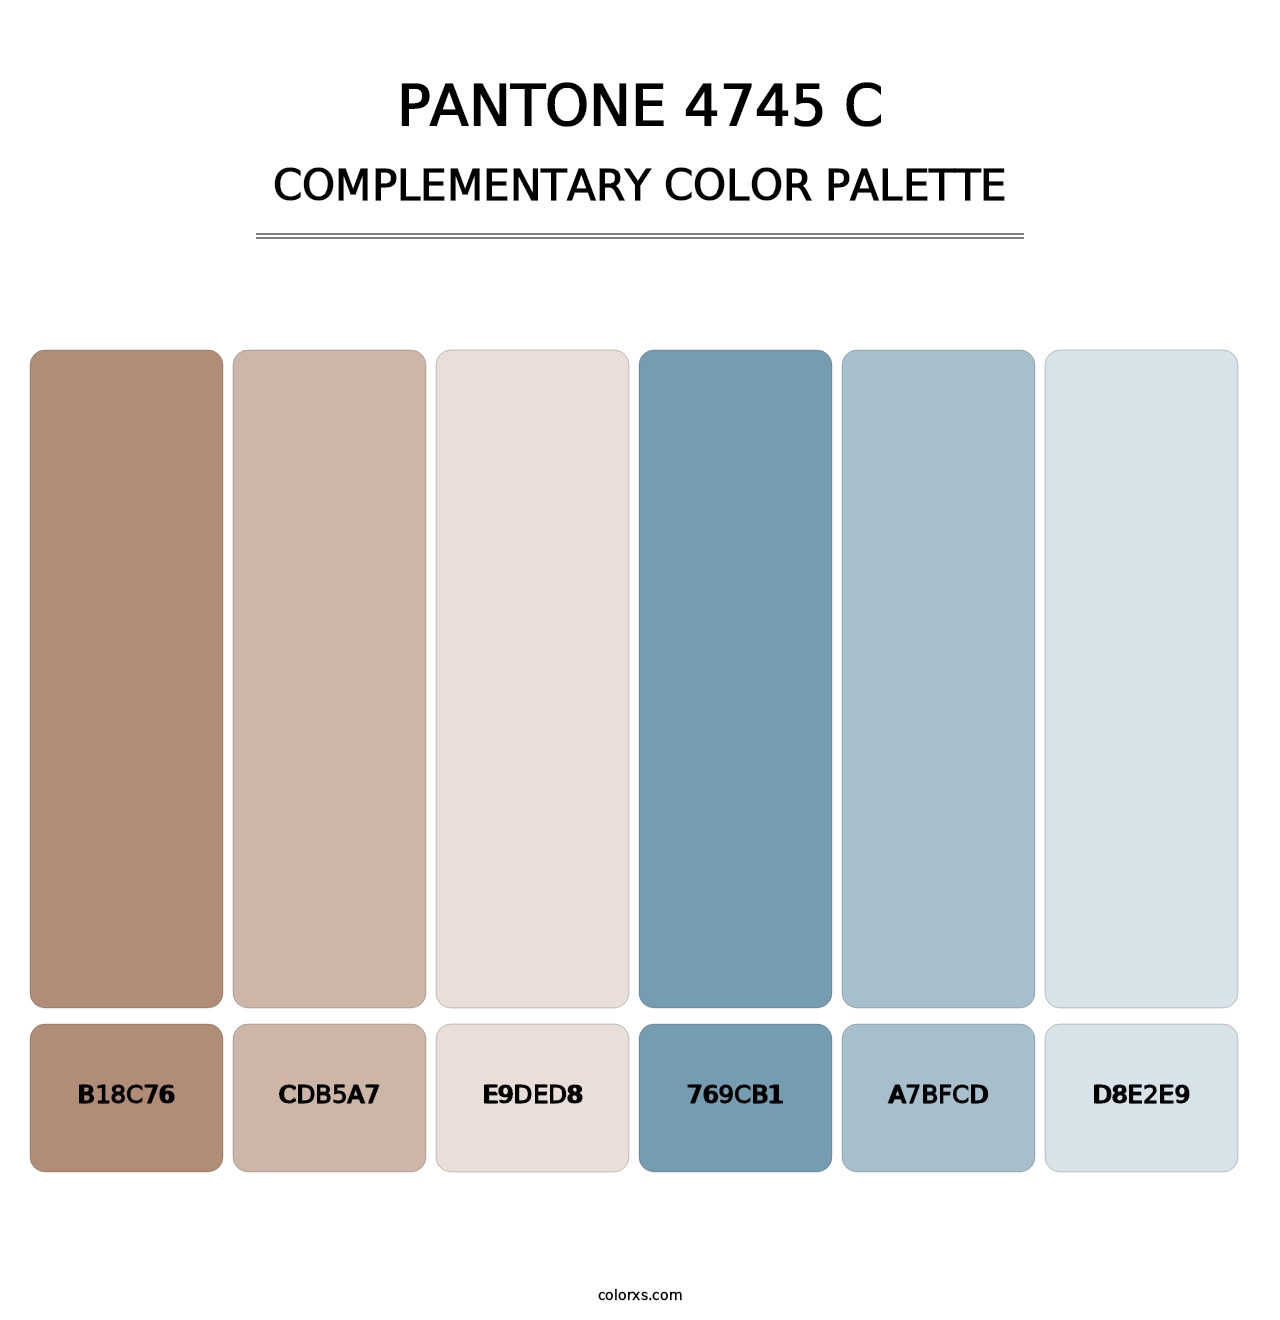 PANTONE 4745 C - Complementary Color Palette